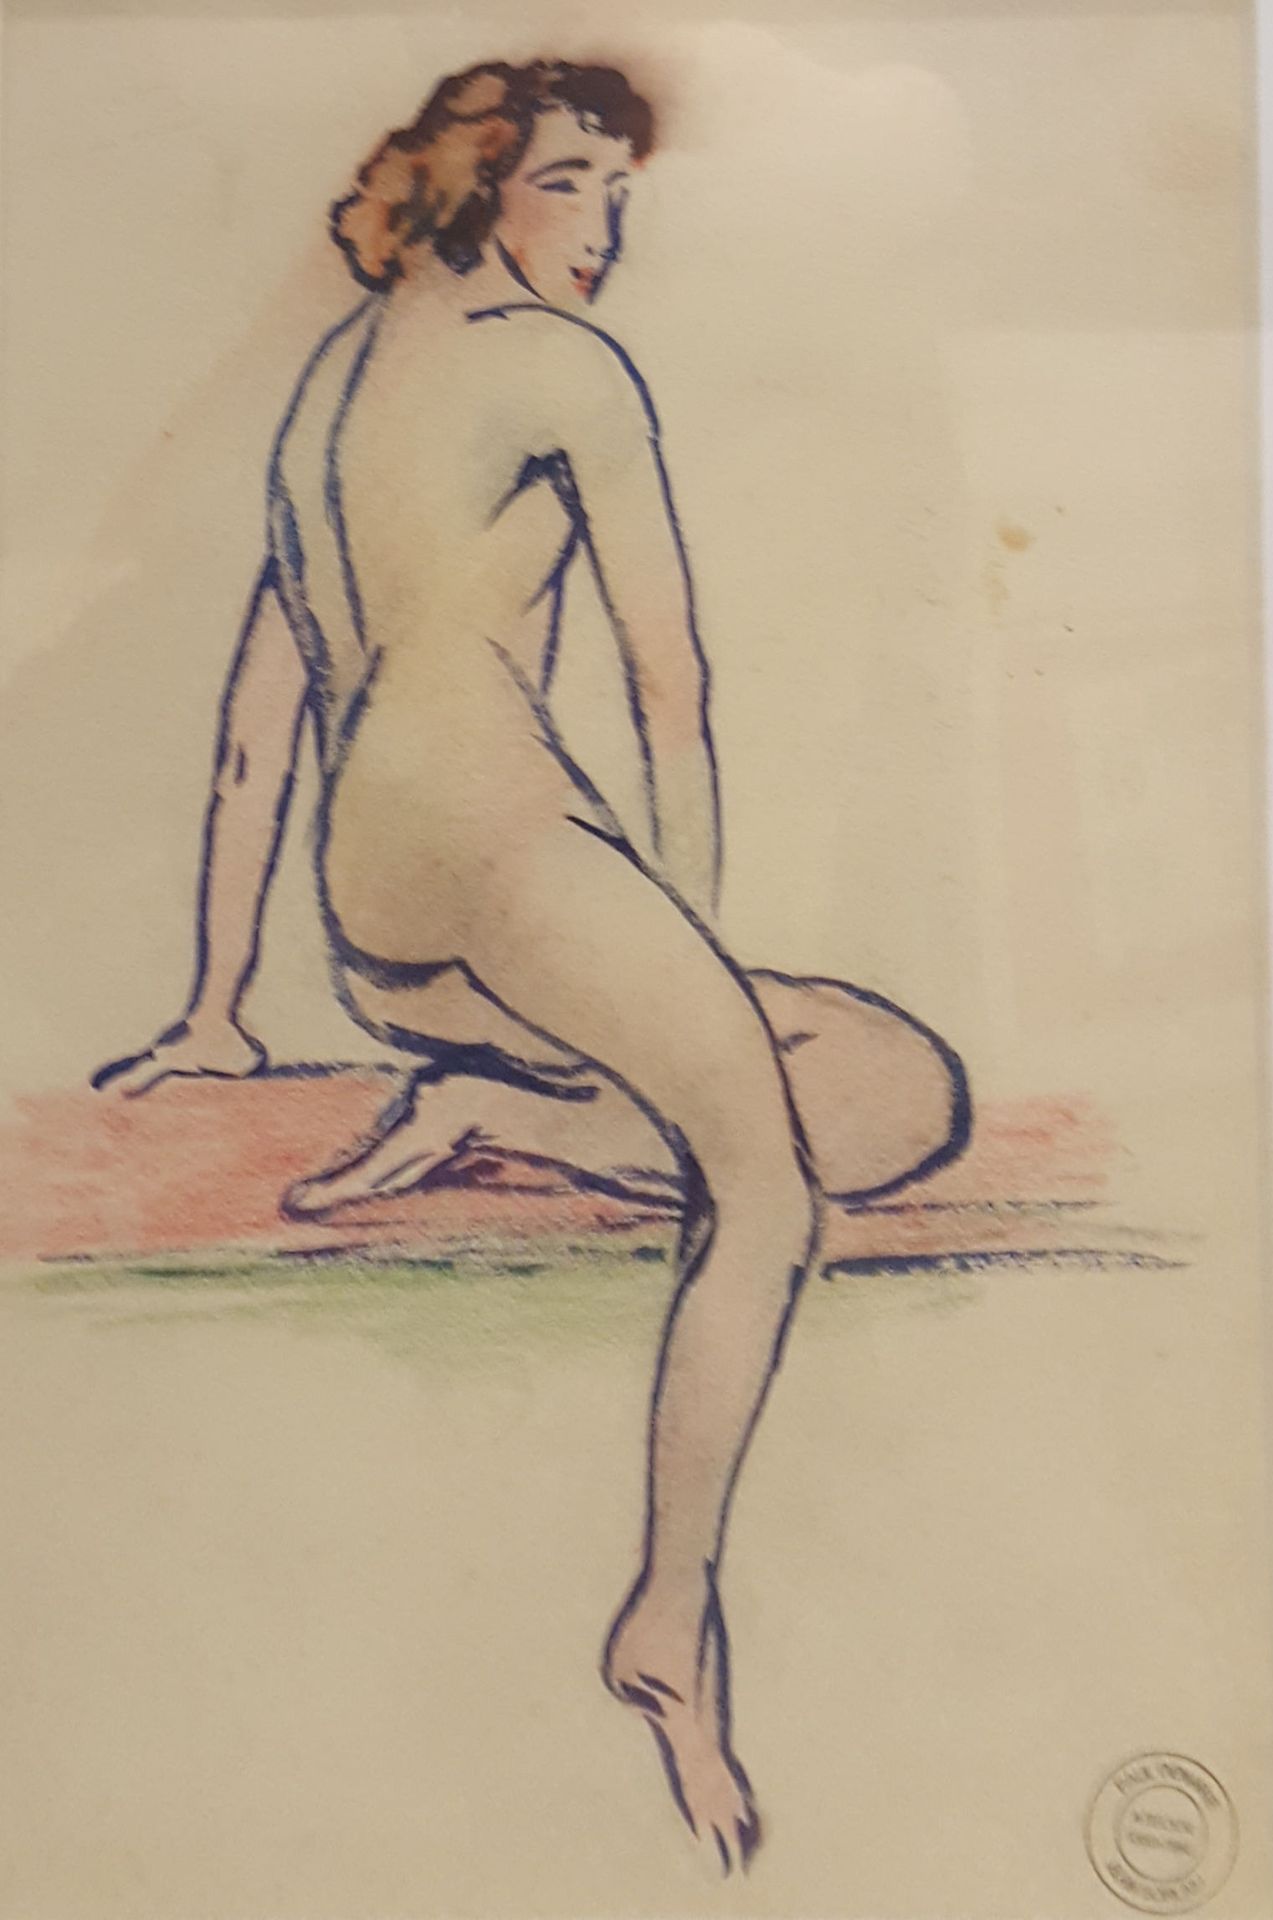 Null SORLAIN Jean (1859-1942)

Desnudo femenino 

Lápiz sobre papel, lleva el se&hellip;